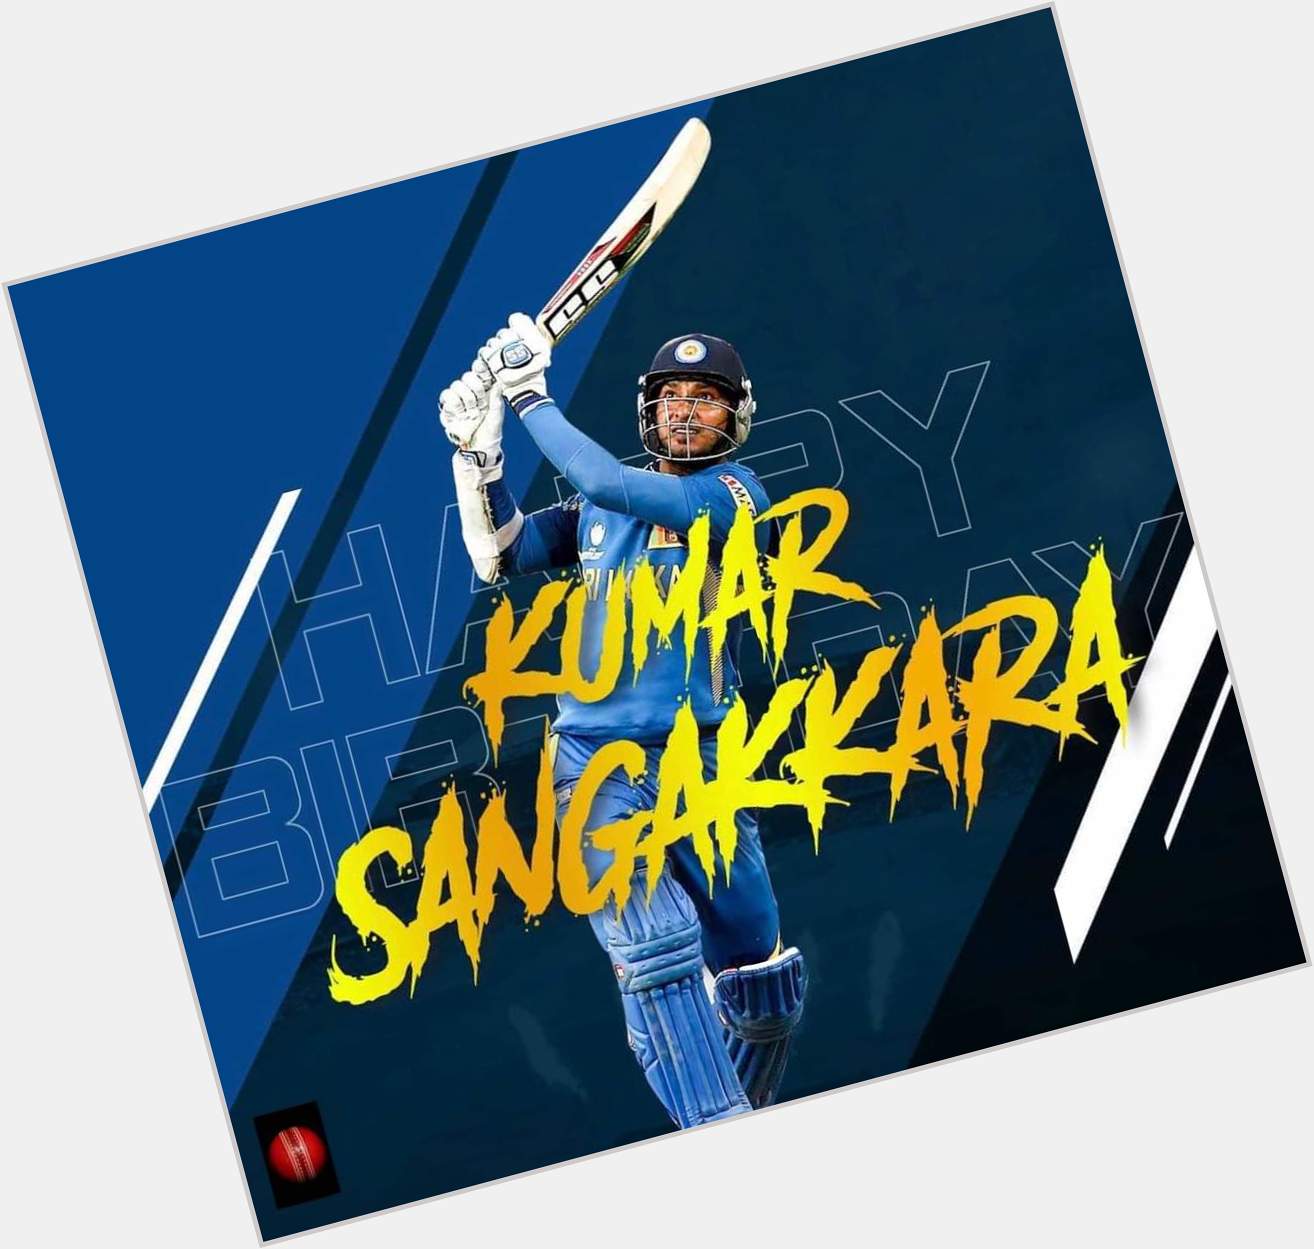 Happy Birthday The legendary Cricketer KUMAR SANGAKKARA   